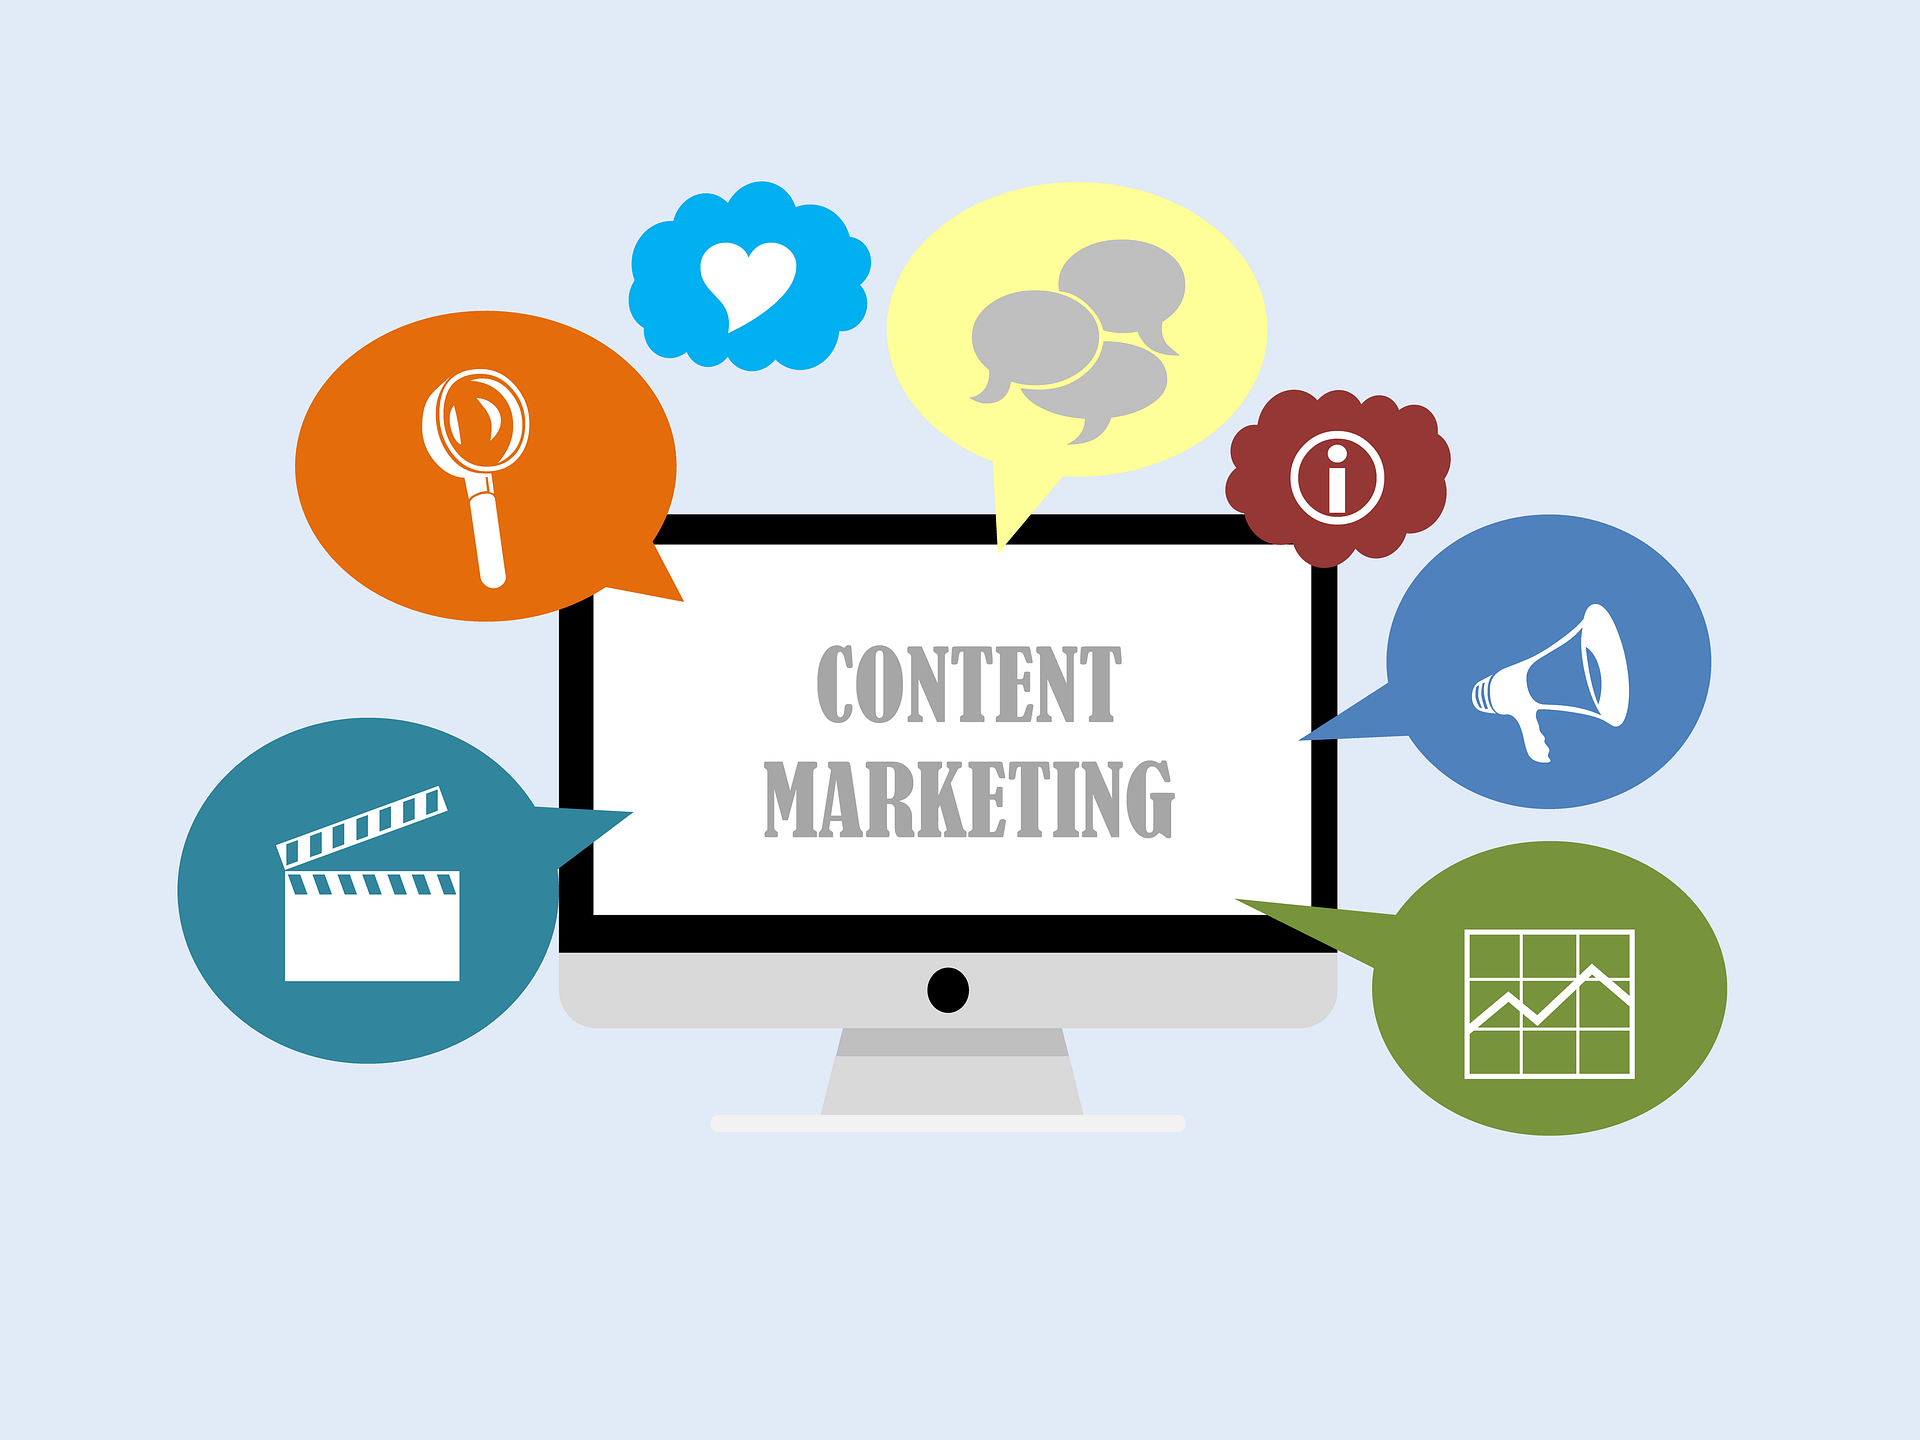 content marketing platforms